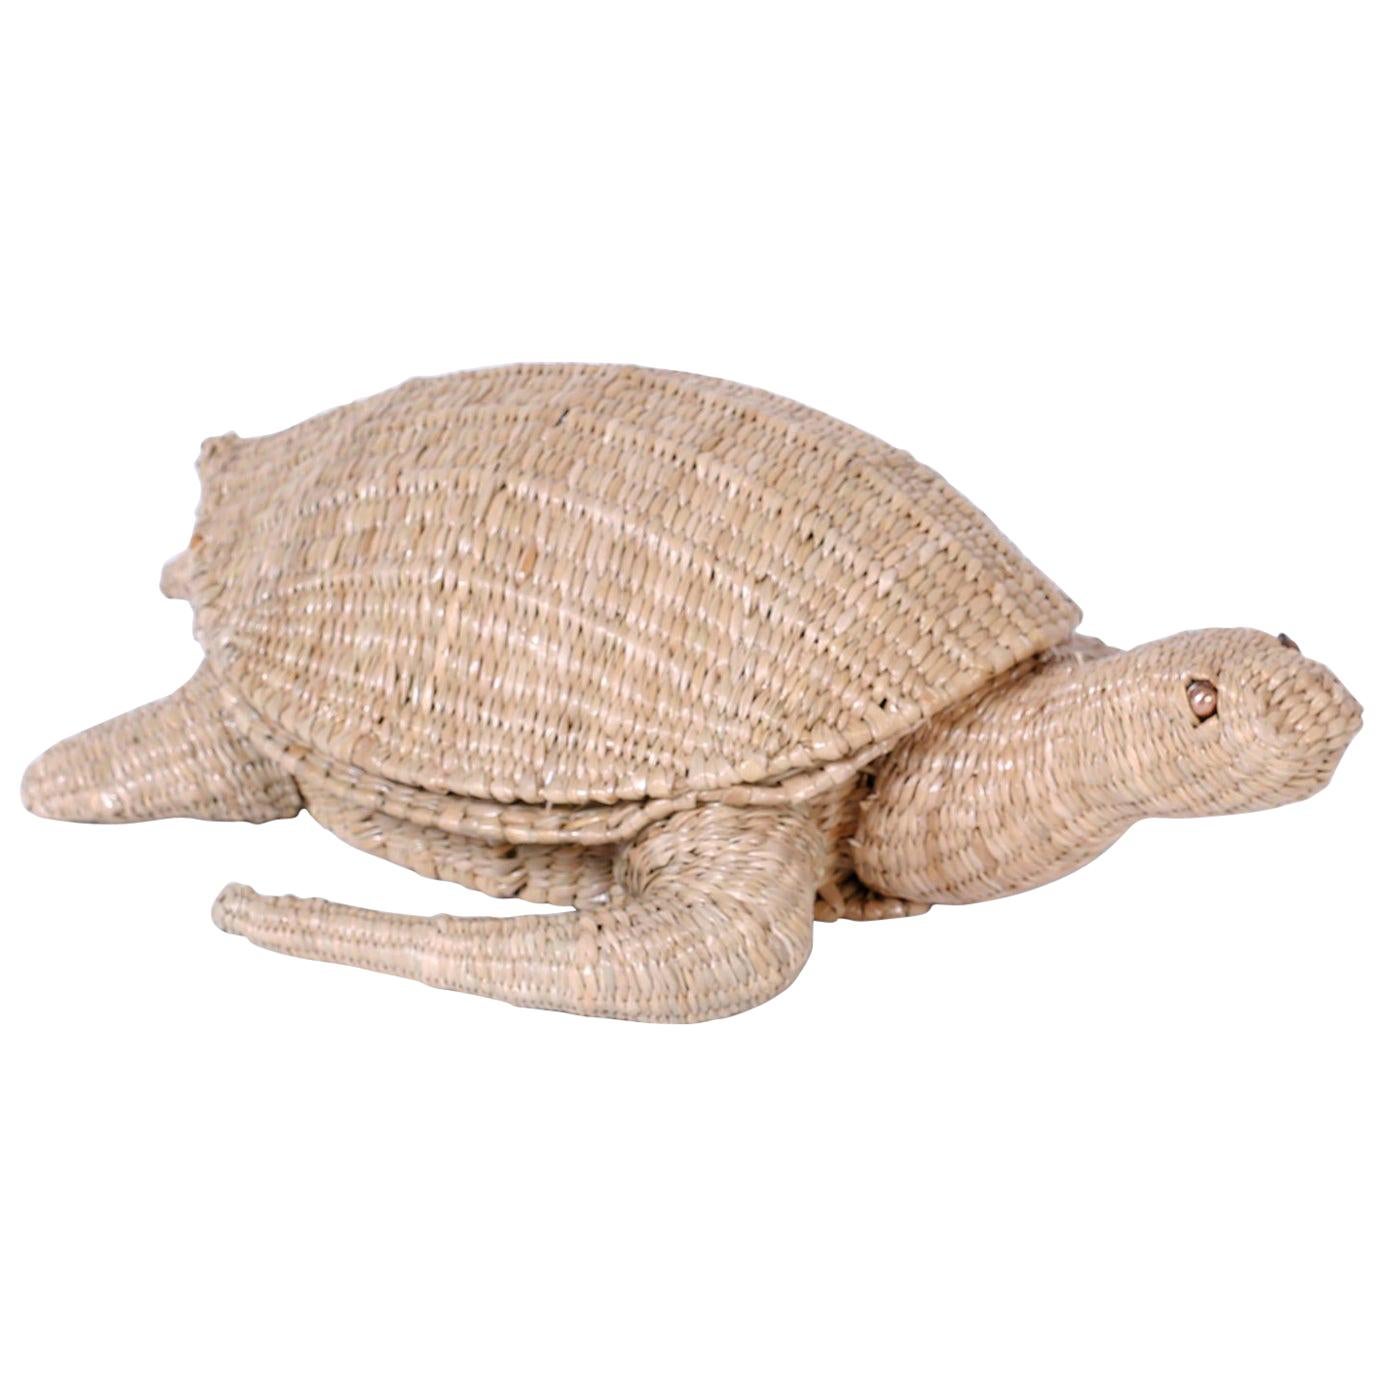 Mario Torres Wicker Turtle